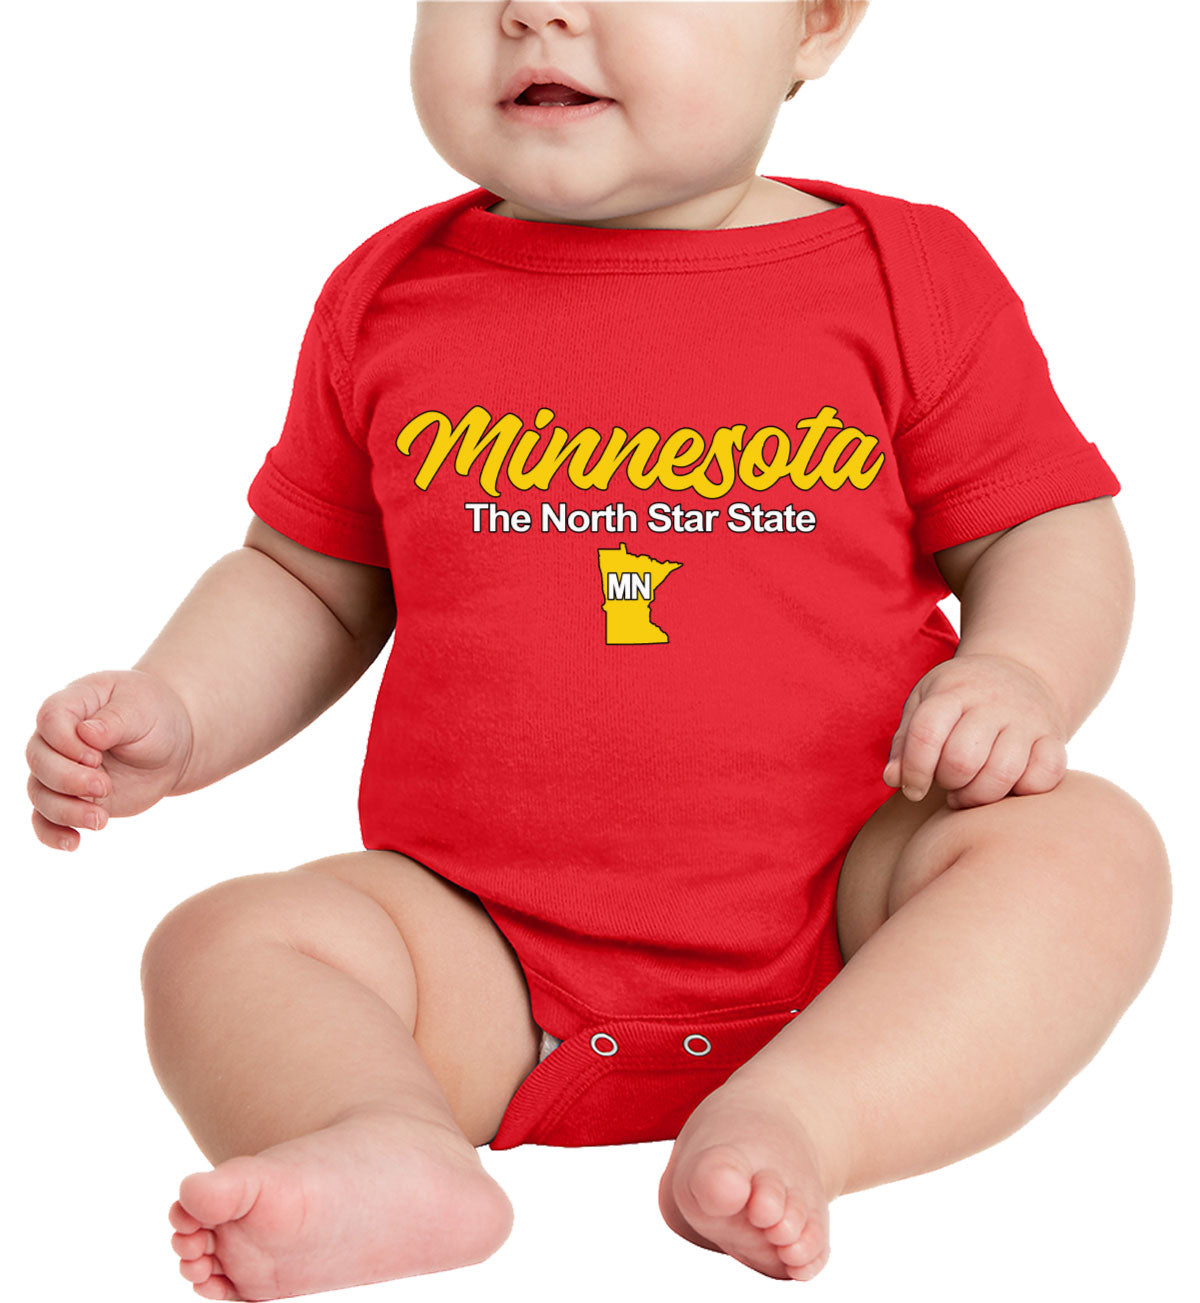 Minnesota The North Star State Baby Onesie